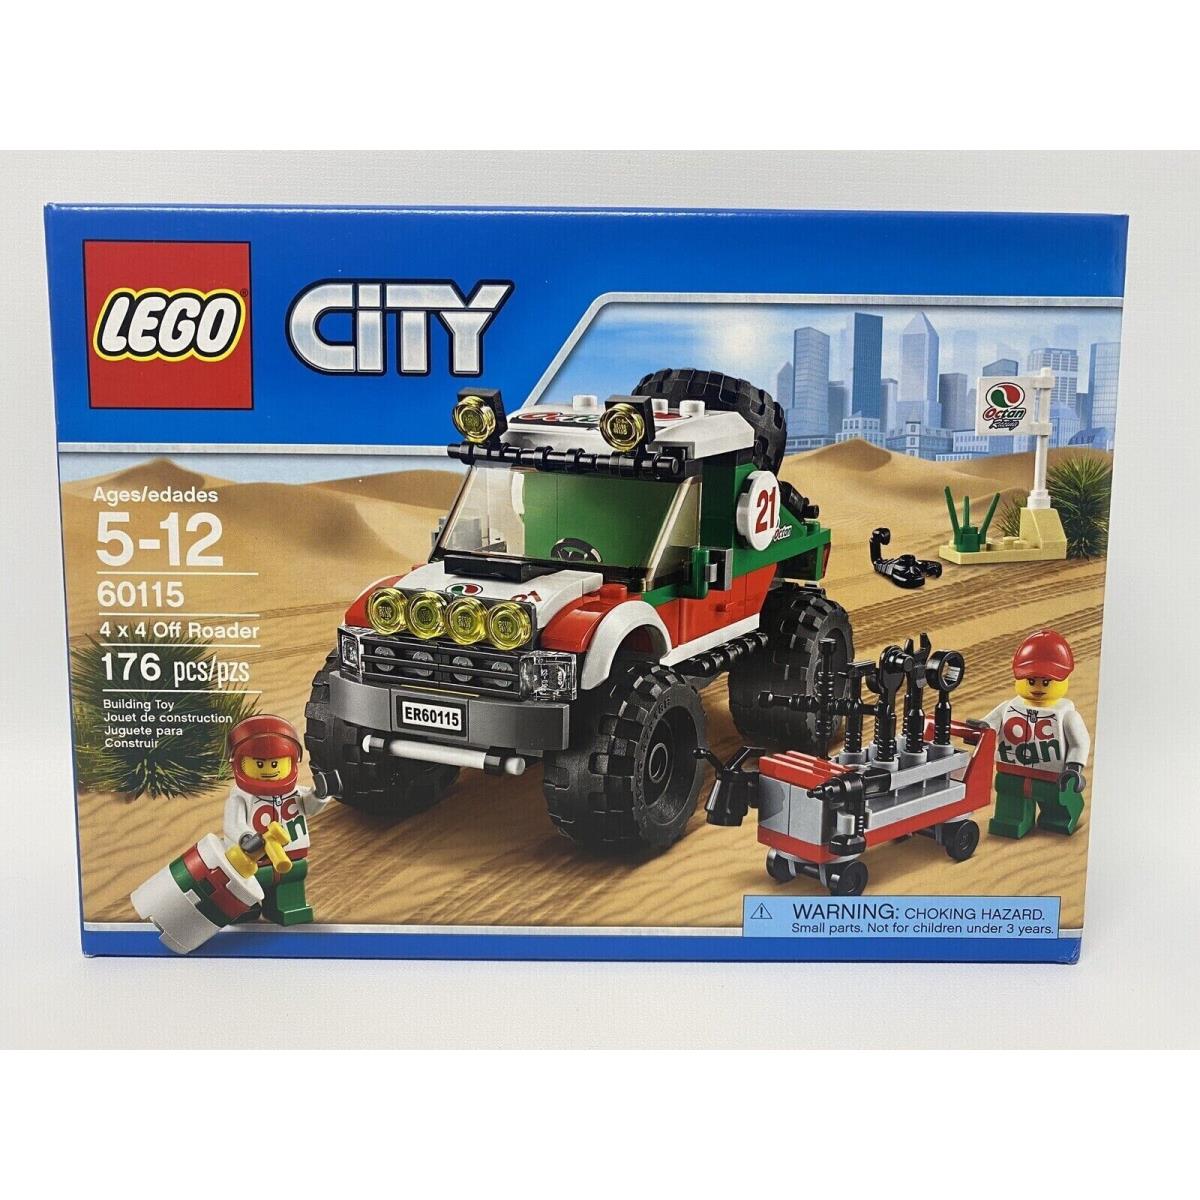 Lego City 4 x 4 Off Roader 60115 Building Kit 176 Pcs Retired Set Car Model Toy